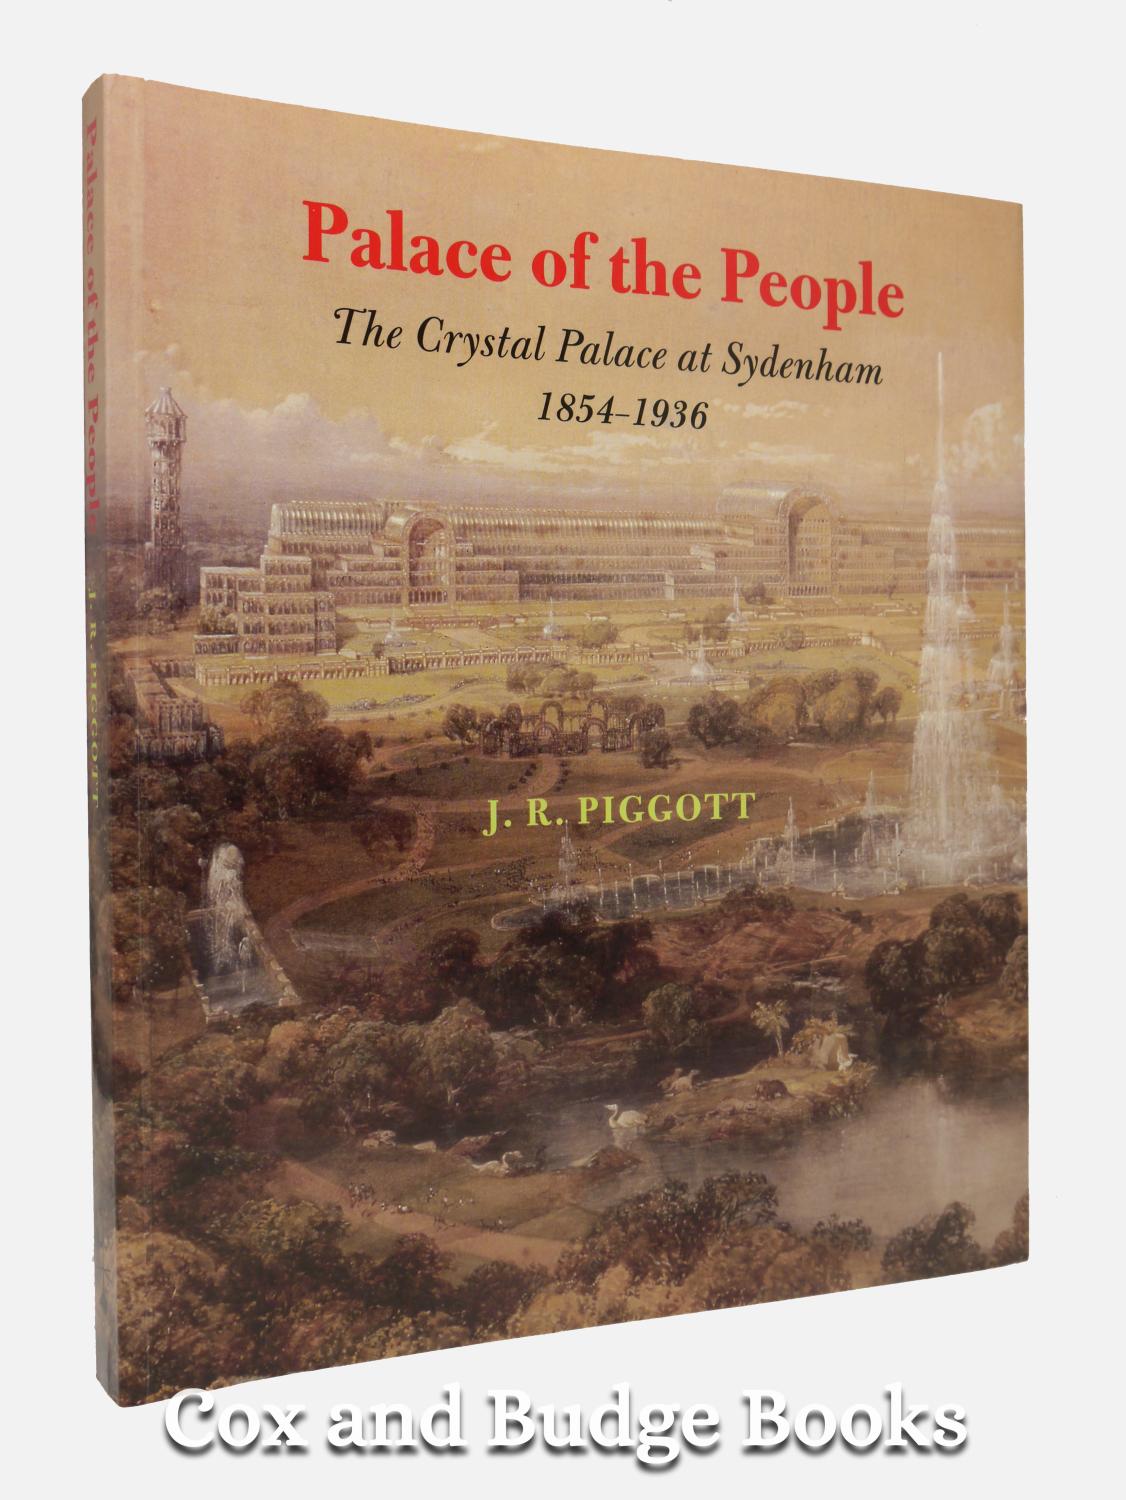 Palace of the People, The Crystal Palace at Sydenham 1854-1936 - J R Piggott